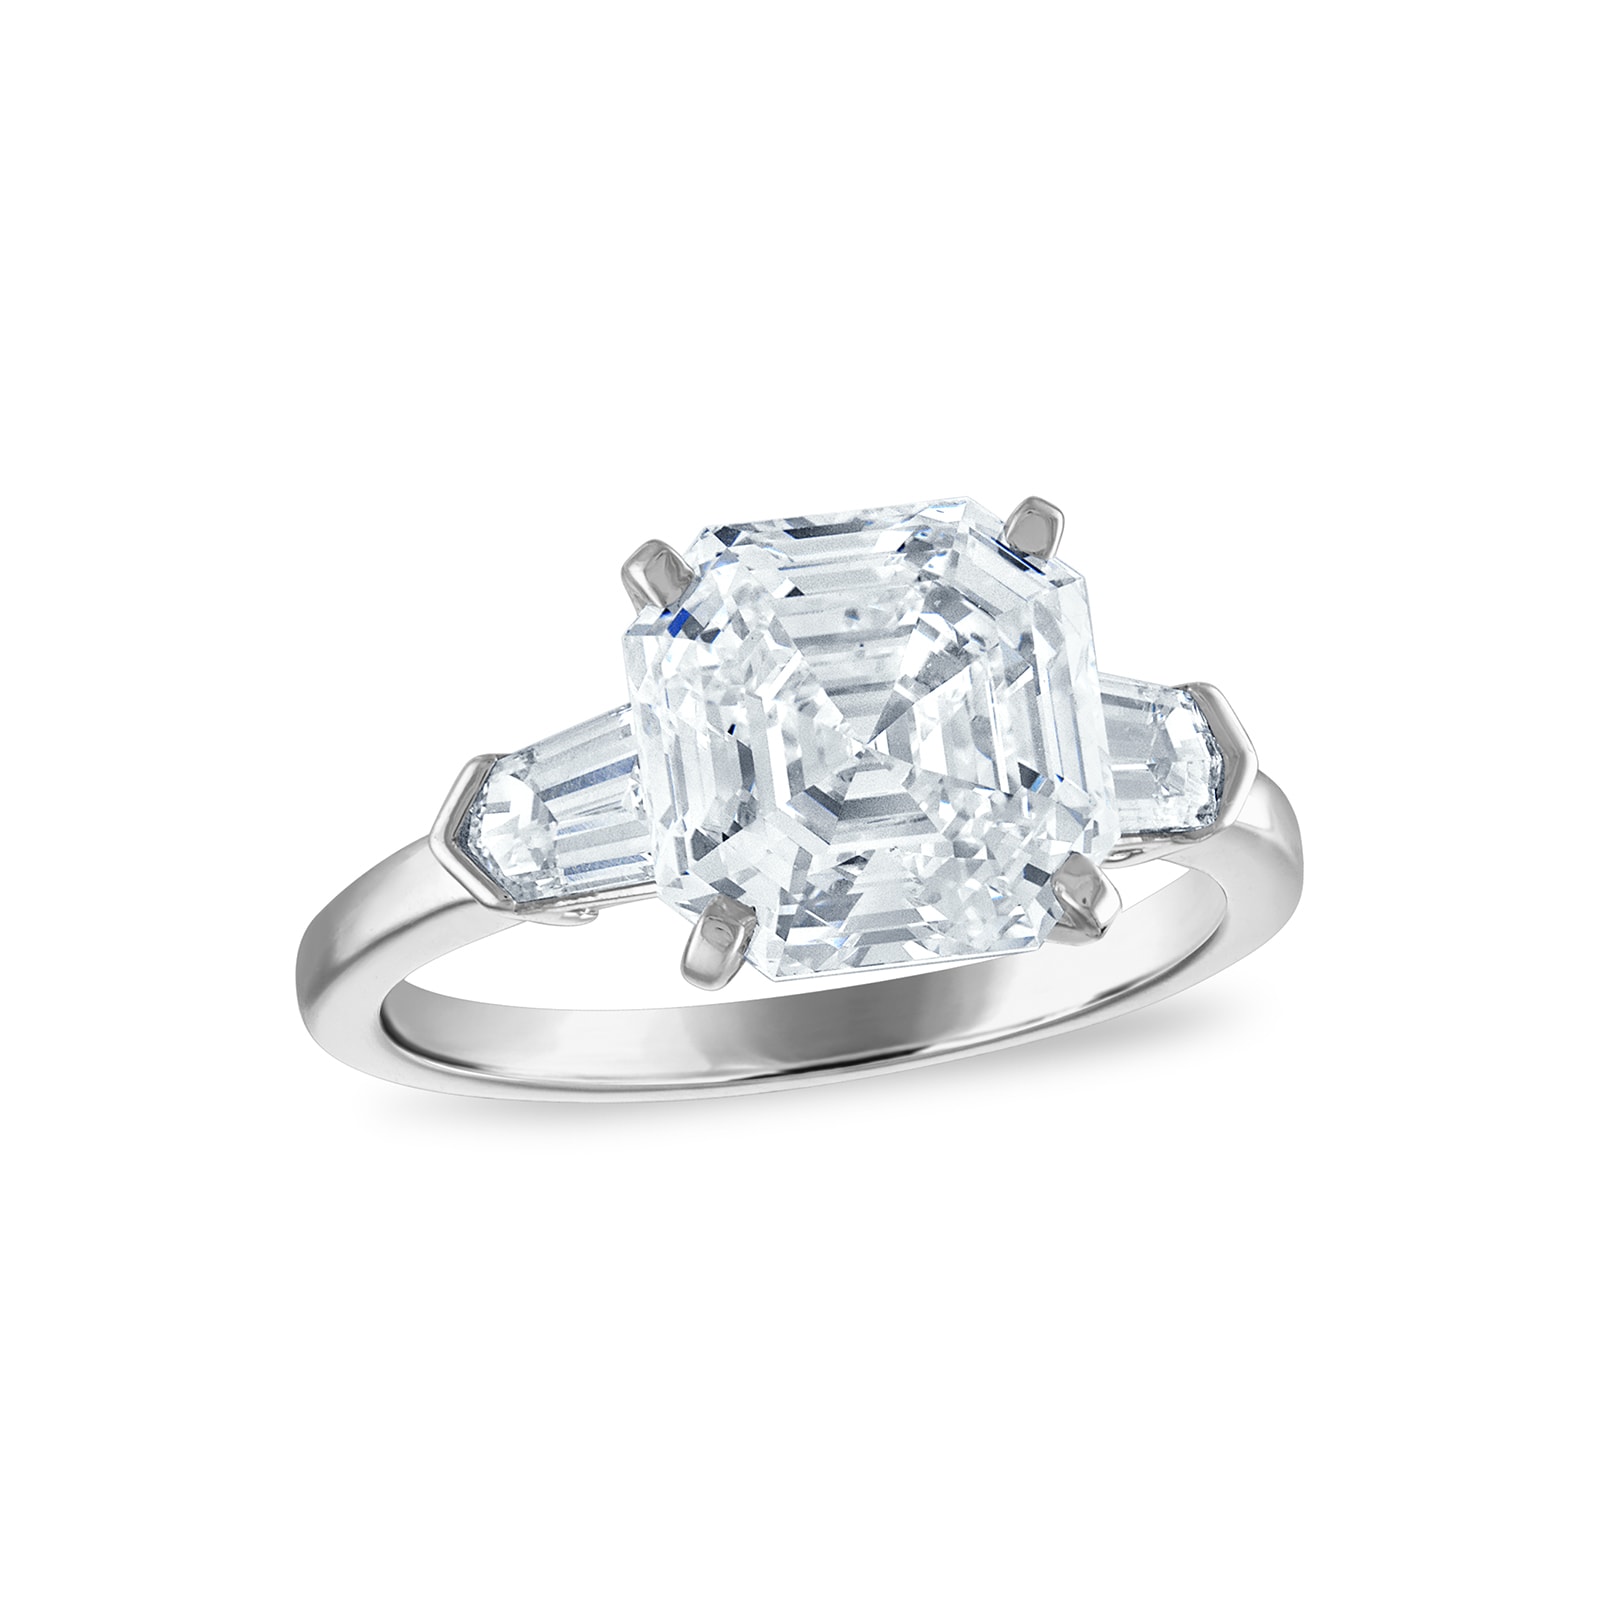 Designer Rings, Luxury Pearl & Diamond Rings for Her, Online & In Store US